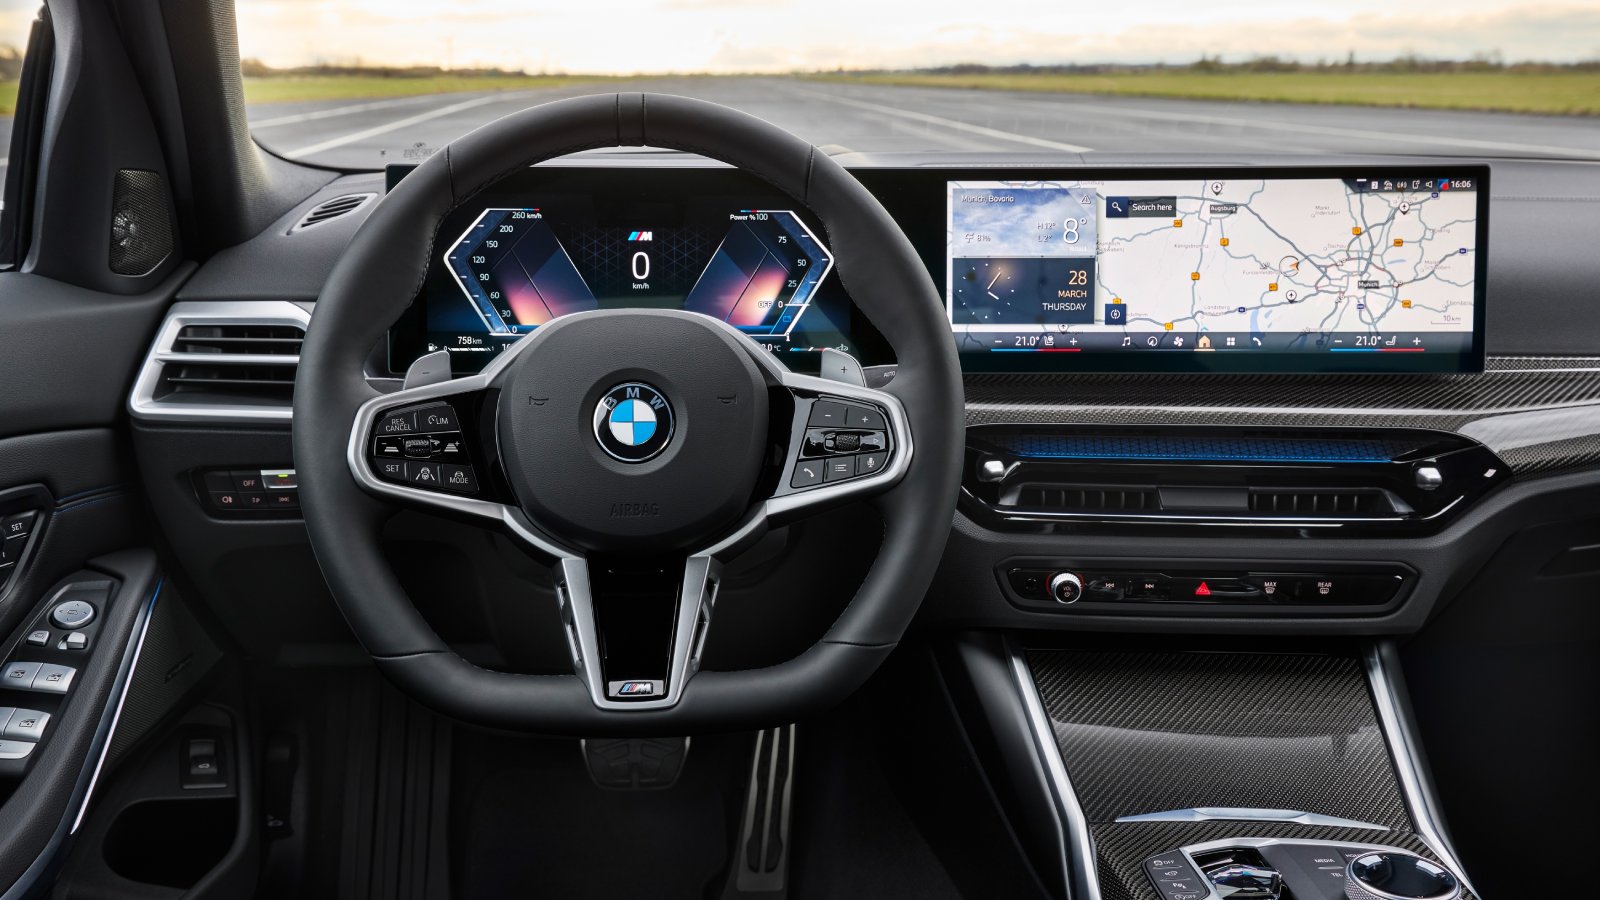 BMW Serie 3 2025 - SoyMotor.com